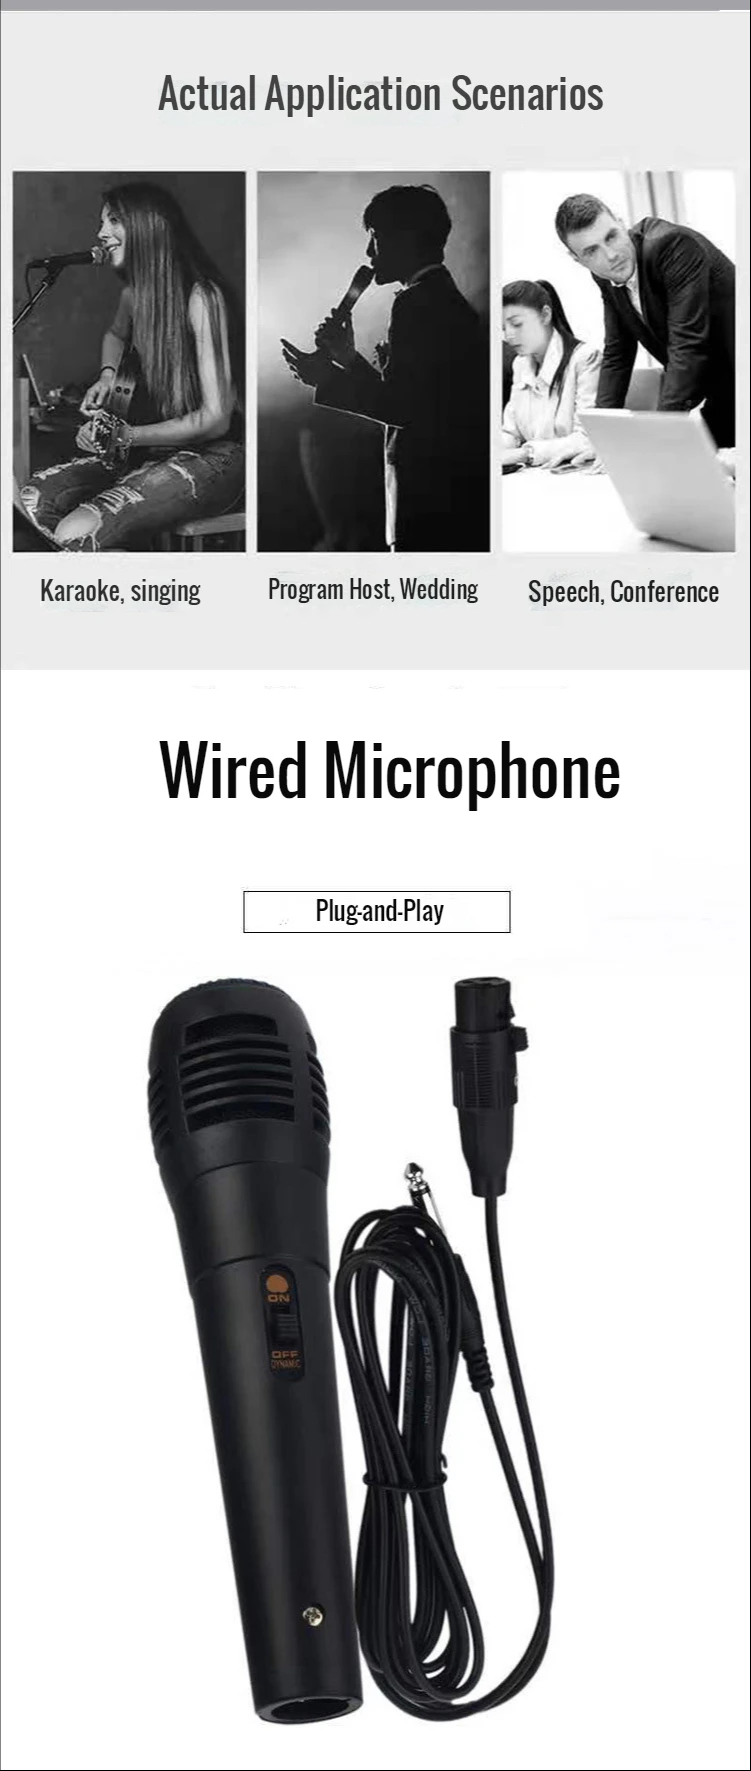 S80361fe10dff401699690e8f95343f48q Home Speaker 6.5mm Microphone Trolley Speaker Karaoke Microphone Wired Recording Studio Microphone